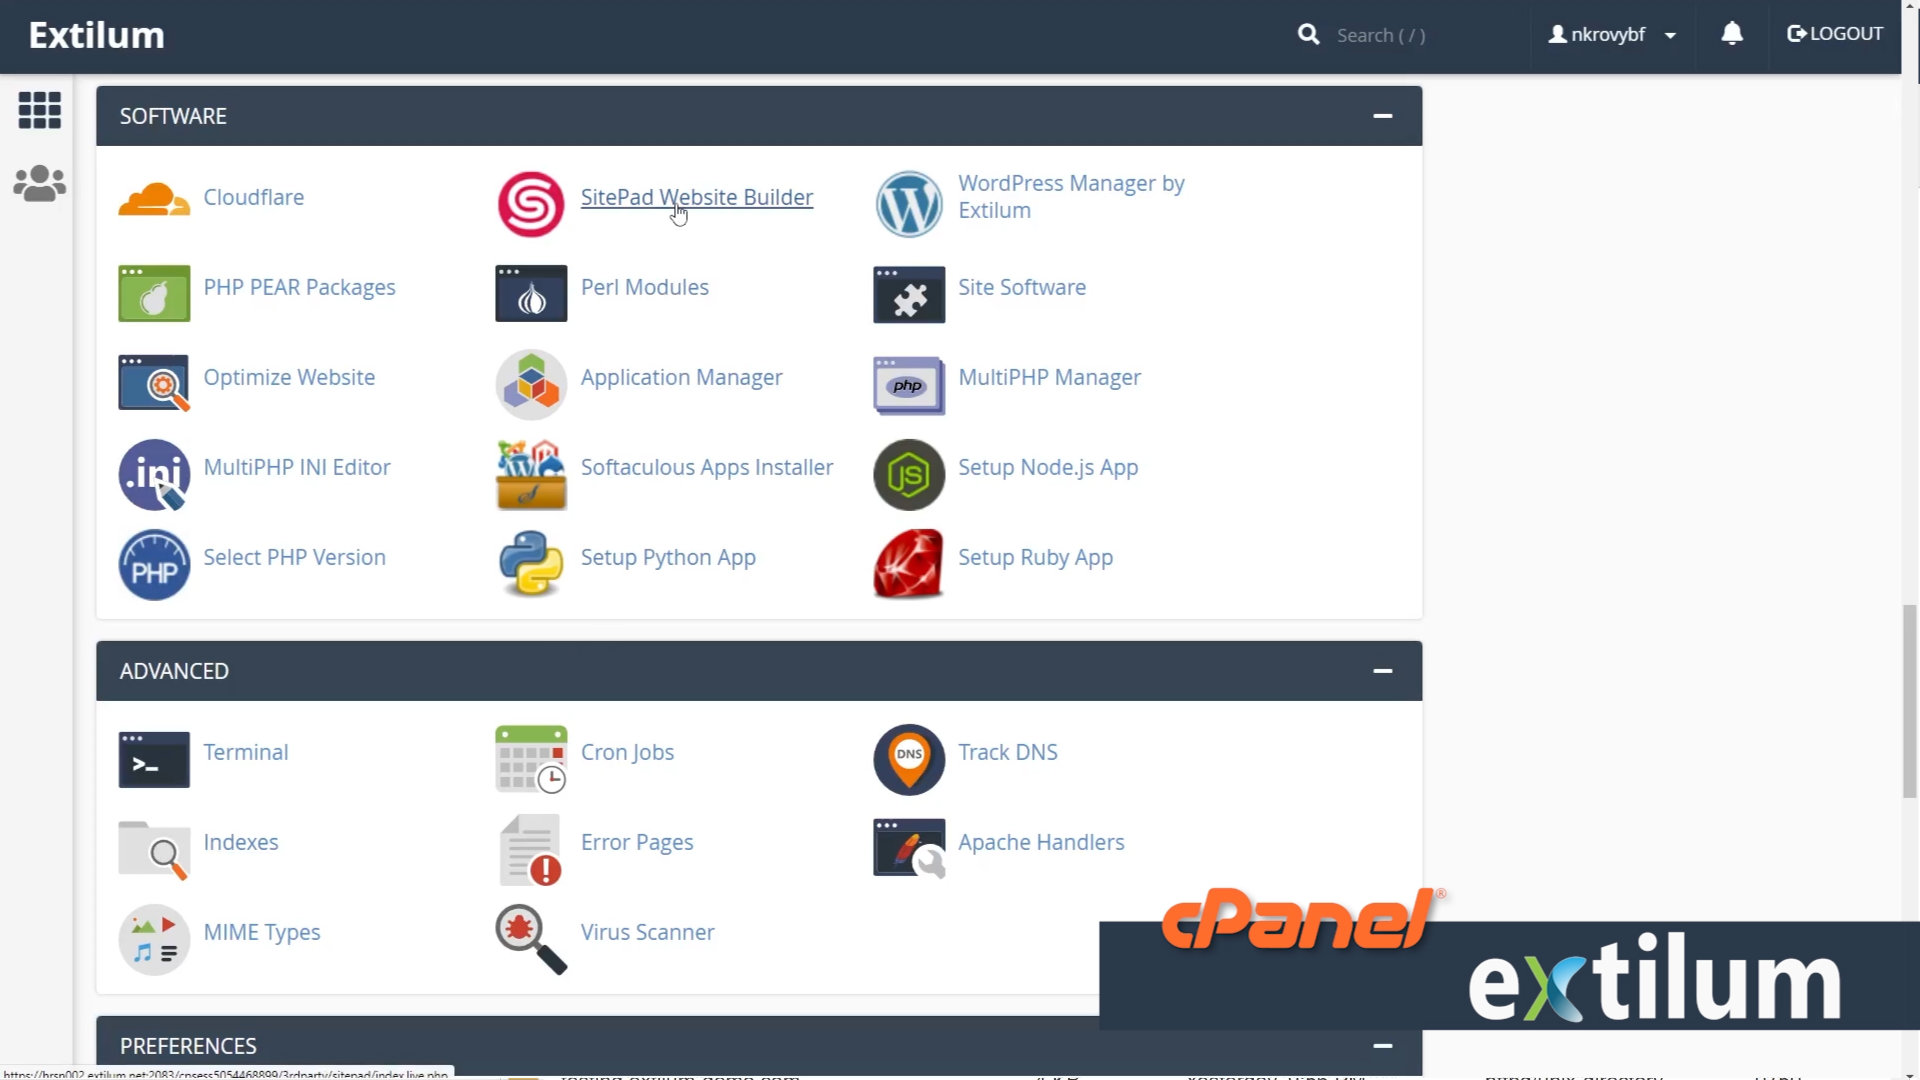 Extilum cPanel - Software - SitePad Website Builder